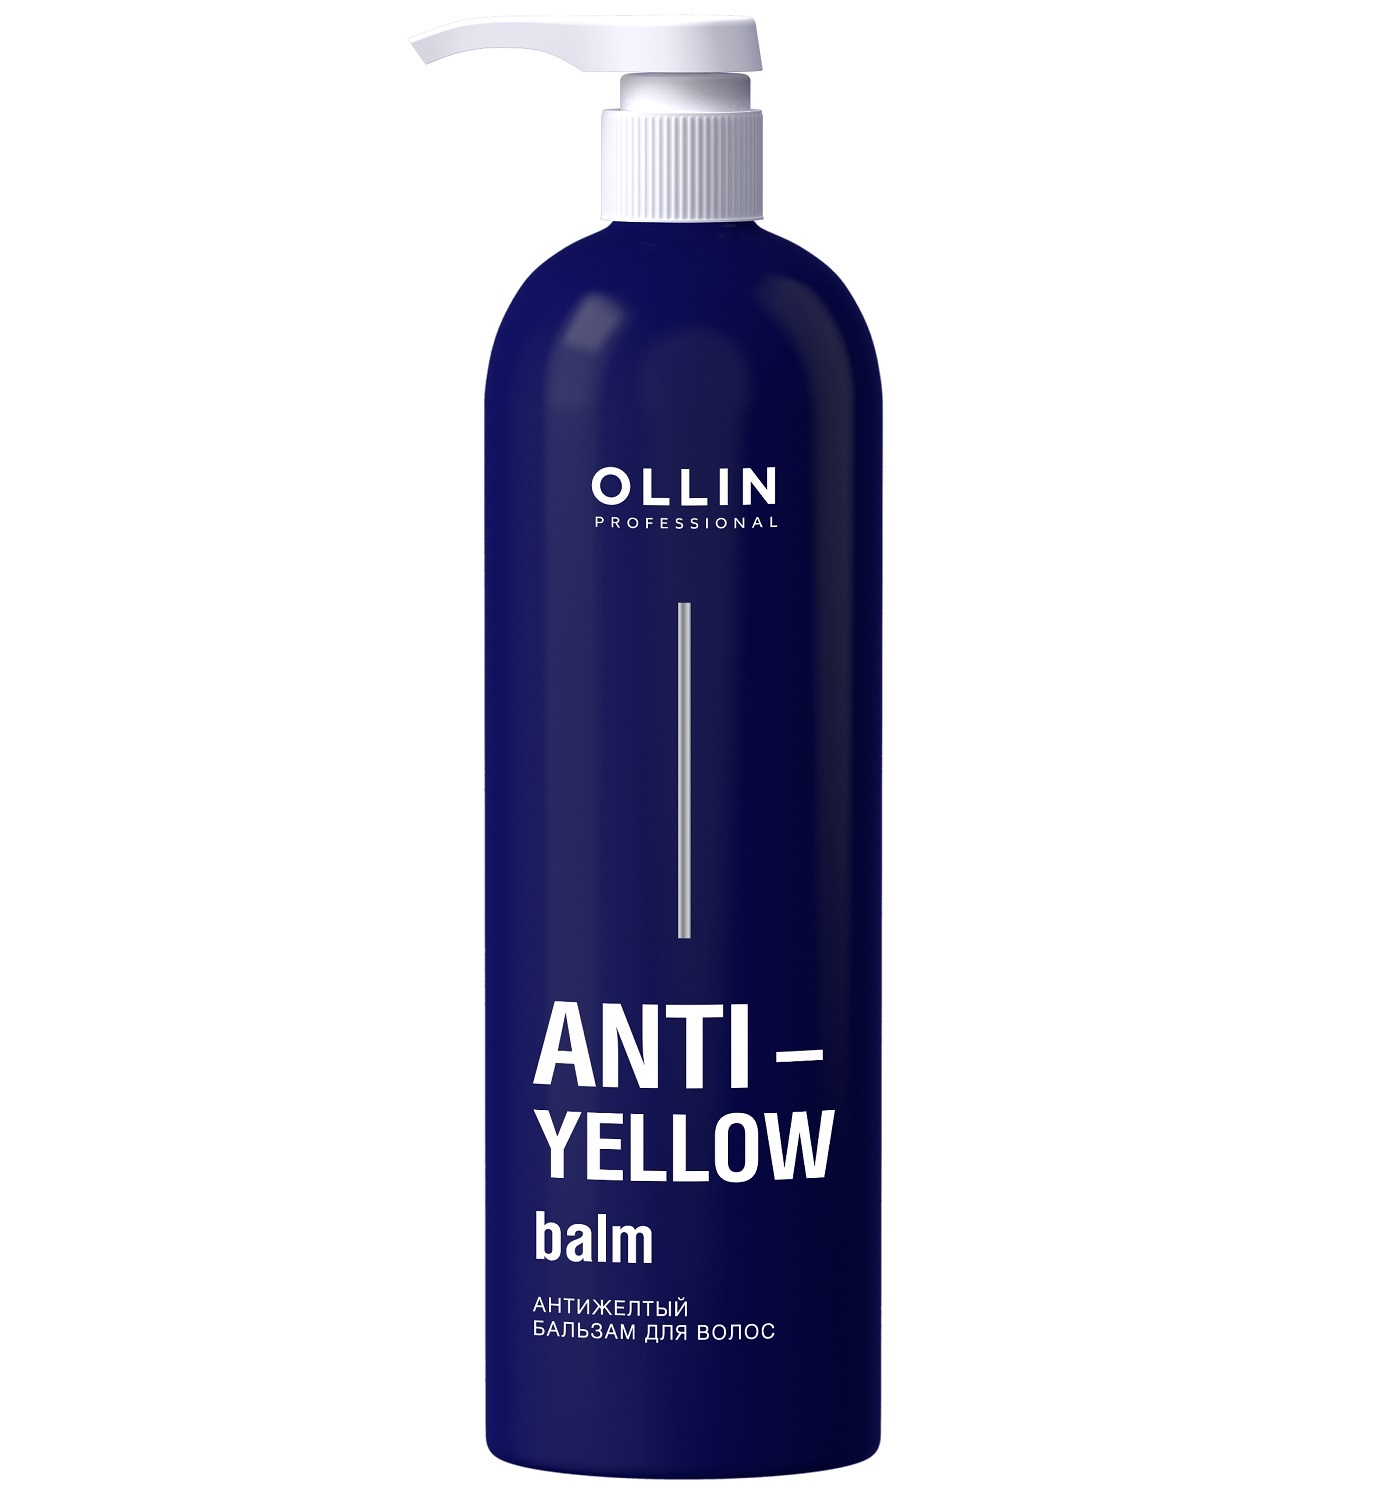 Ollin Professional Антижелтый бальзам для волос Anti-Yellow Balm, 500 мл (Ollin Professional, Anti-Yellow) цена и фото